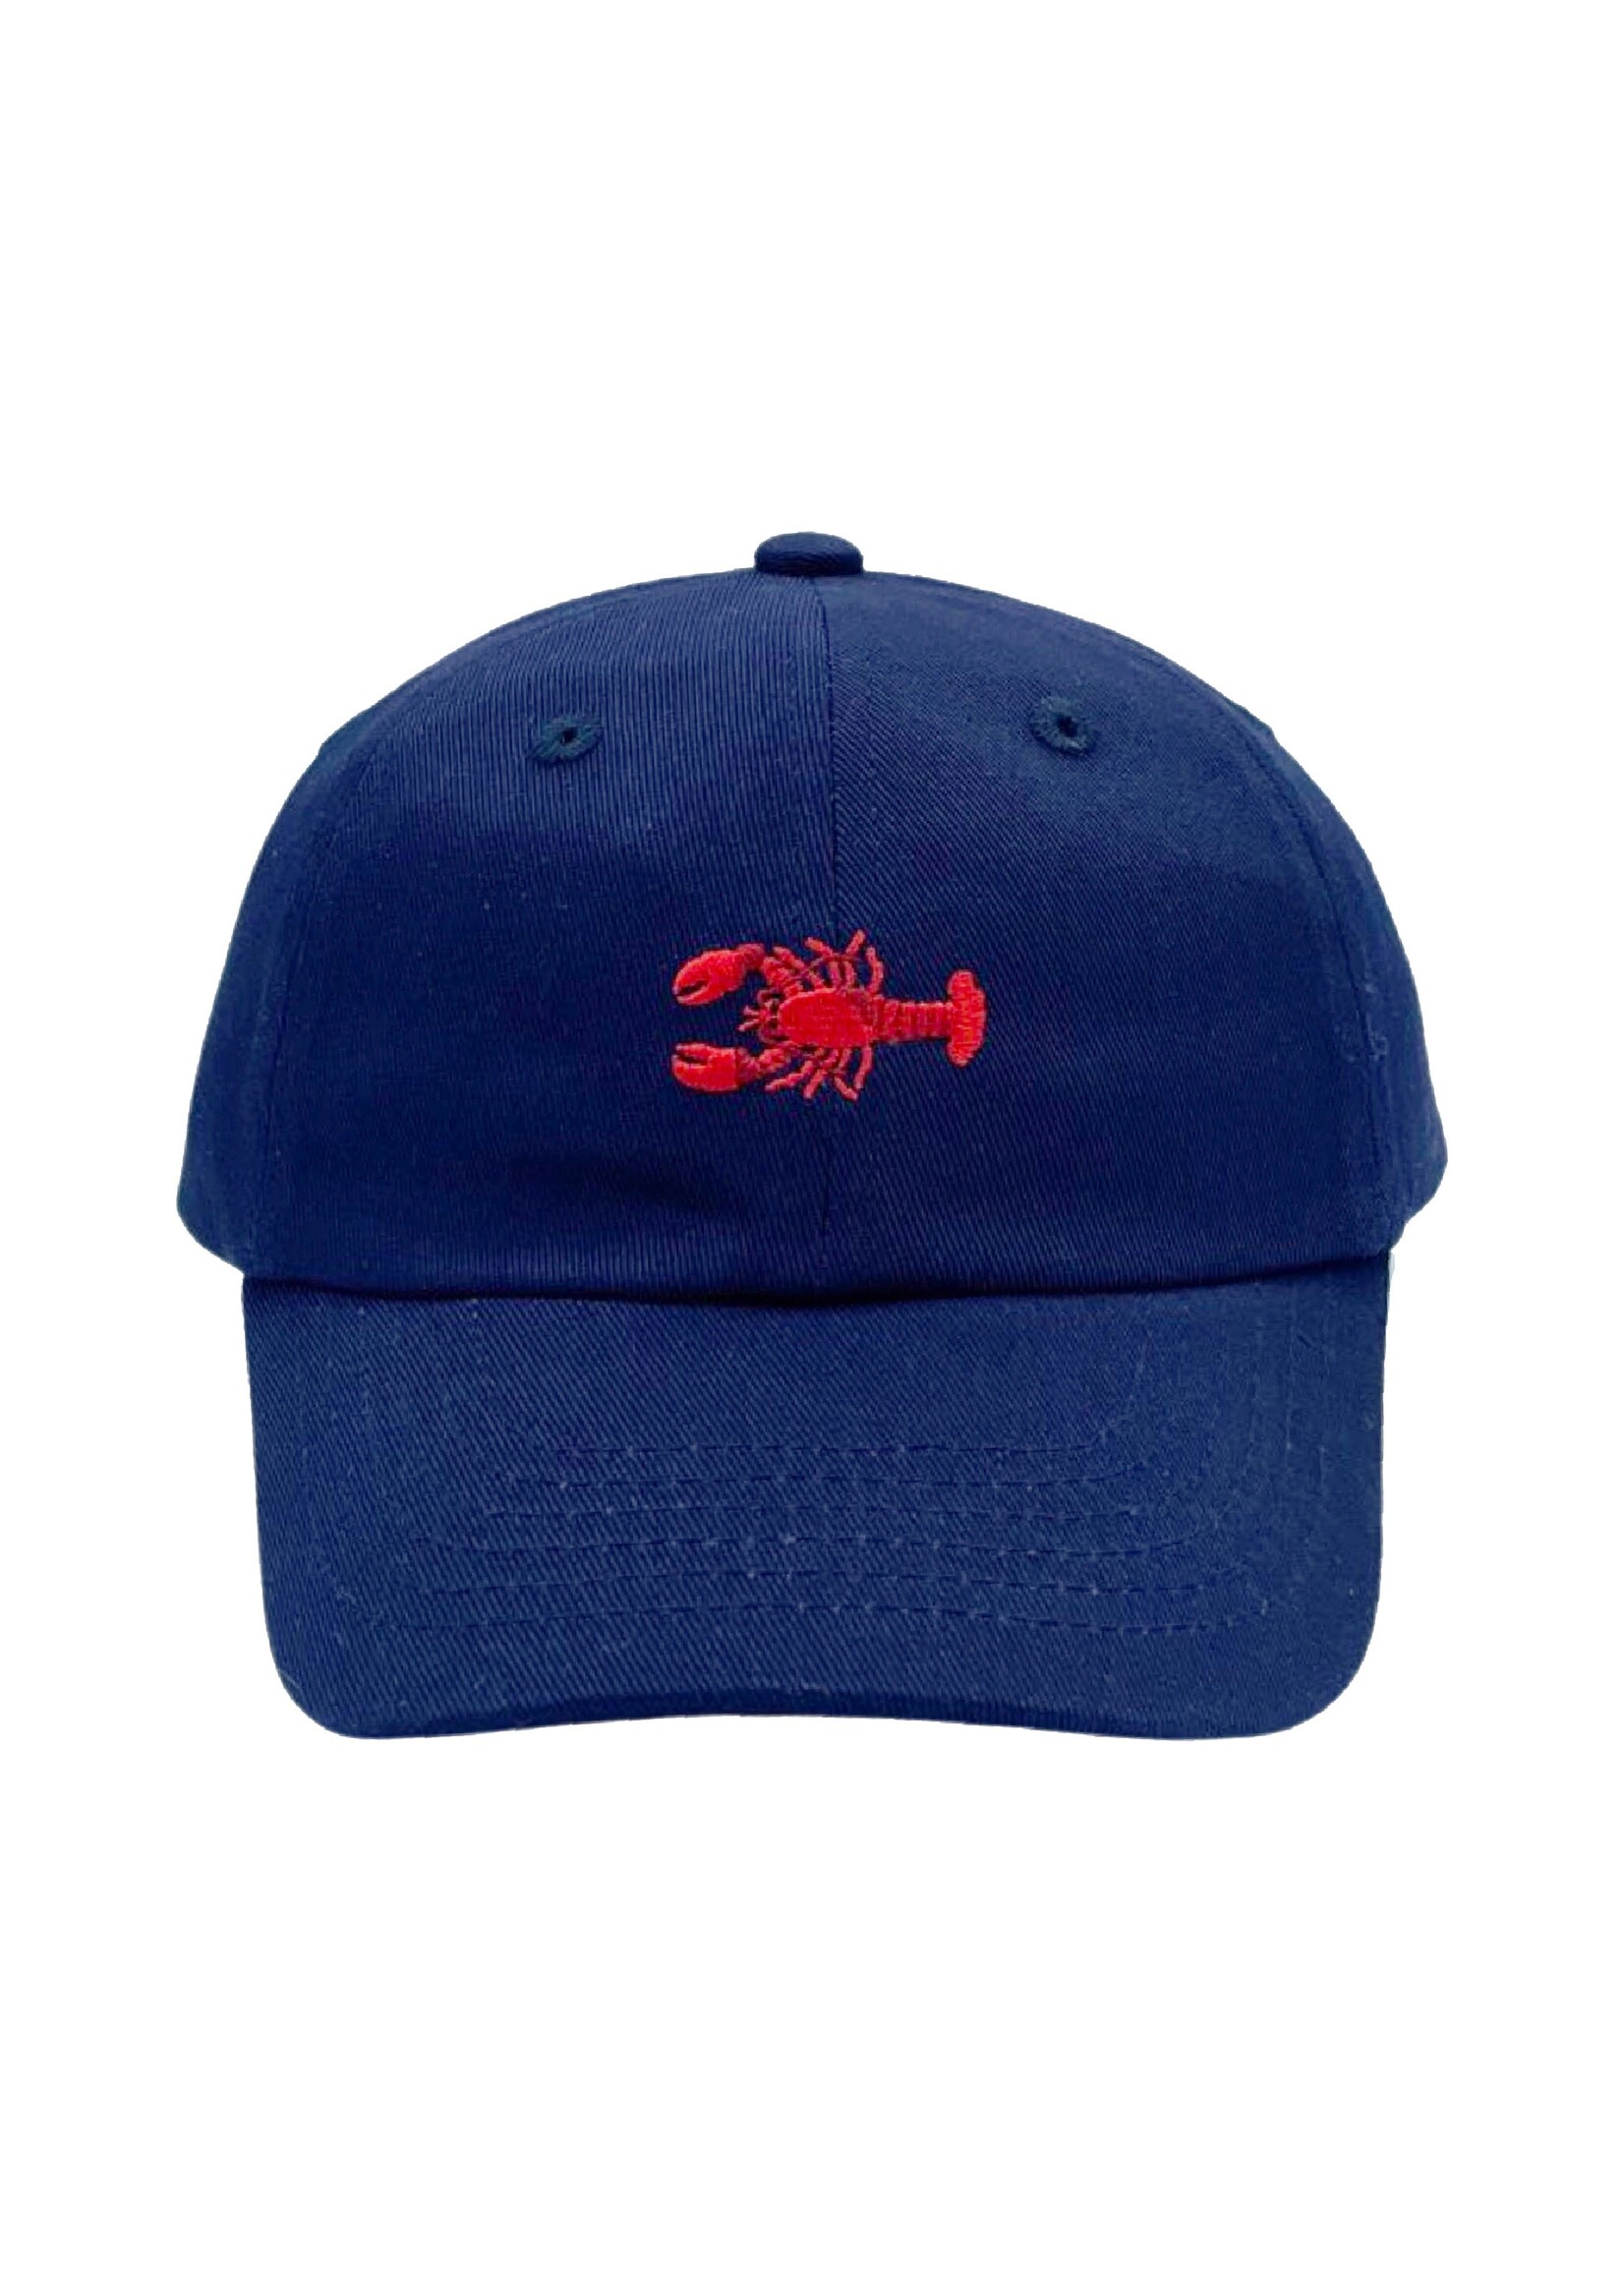 Bits & Bows Bits & Bows Boys Lobster Hat - Navy